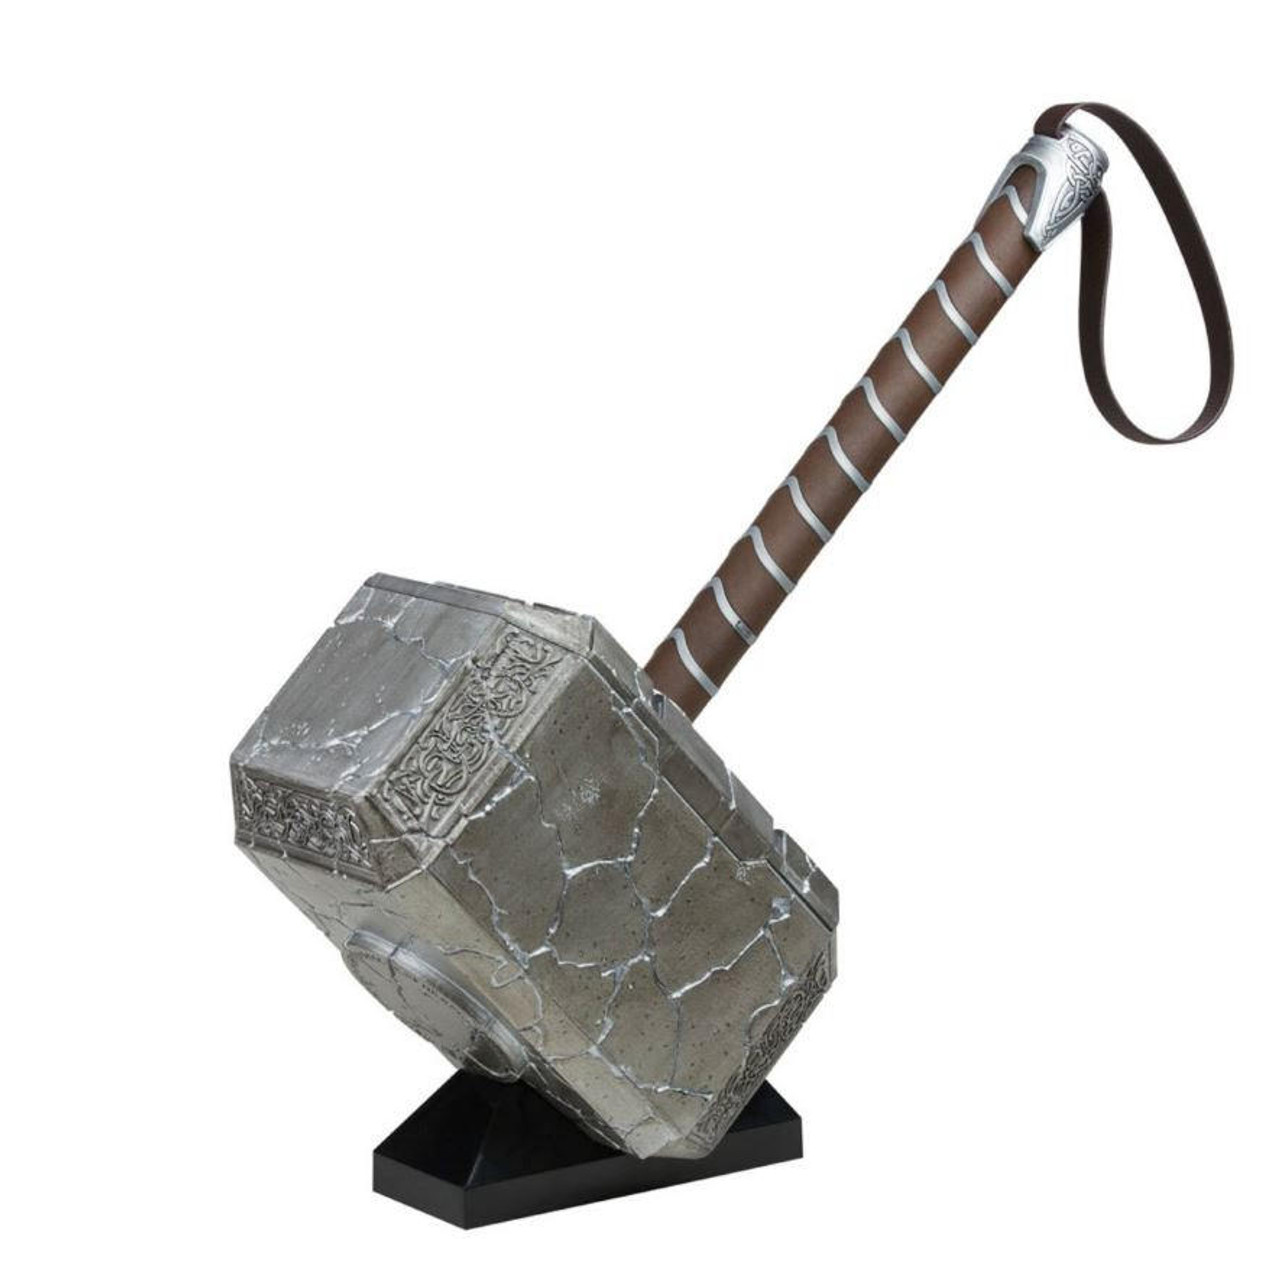 Thor the God of Thunder wielding the mighty hammer Mjollnir or